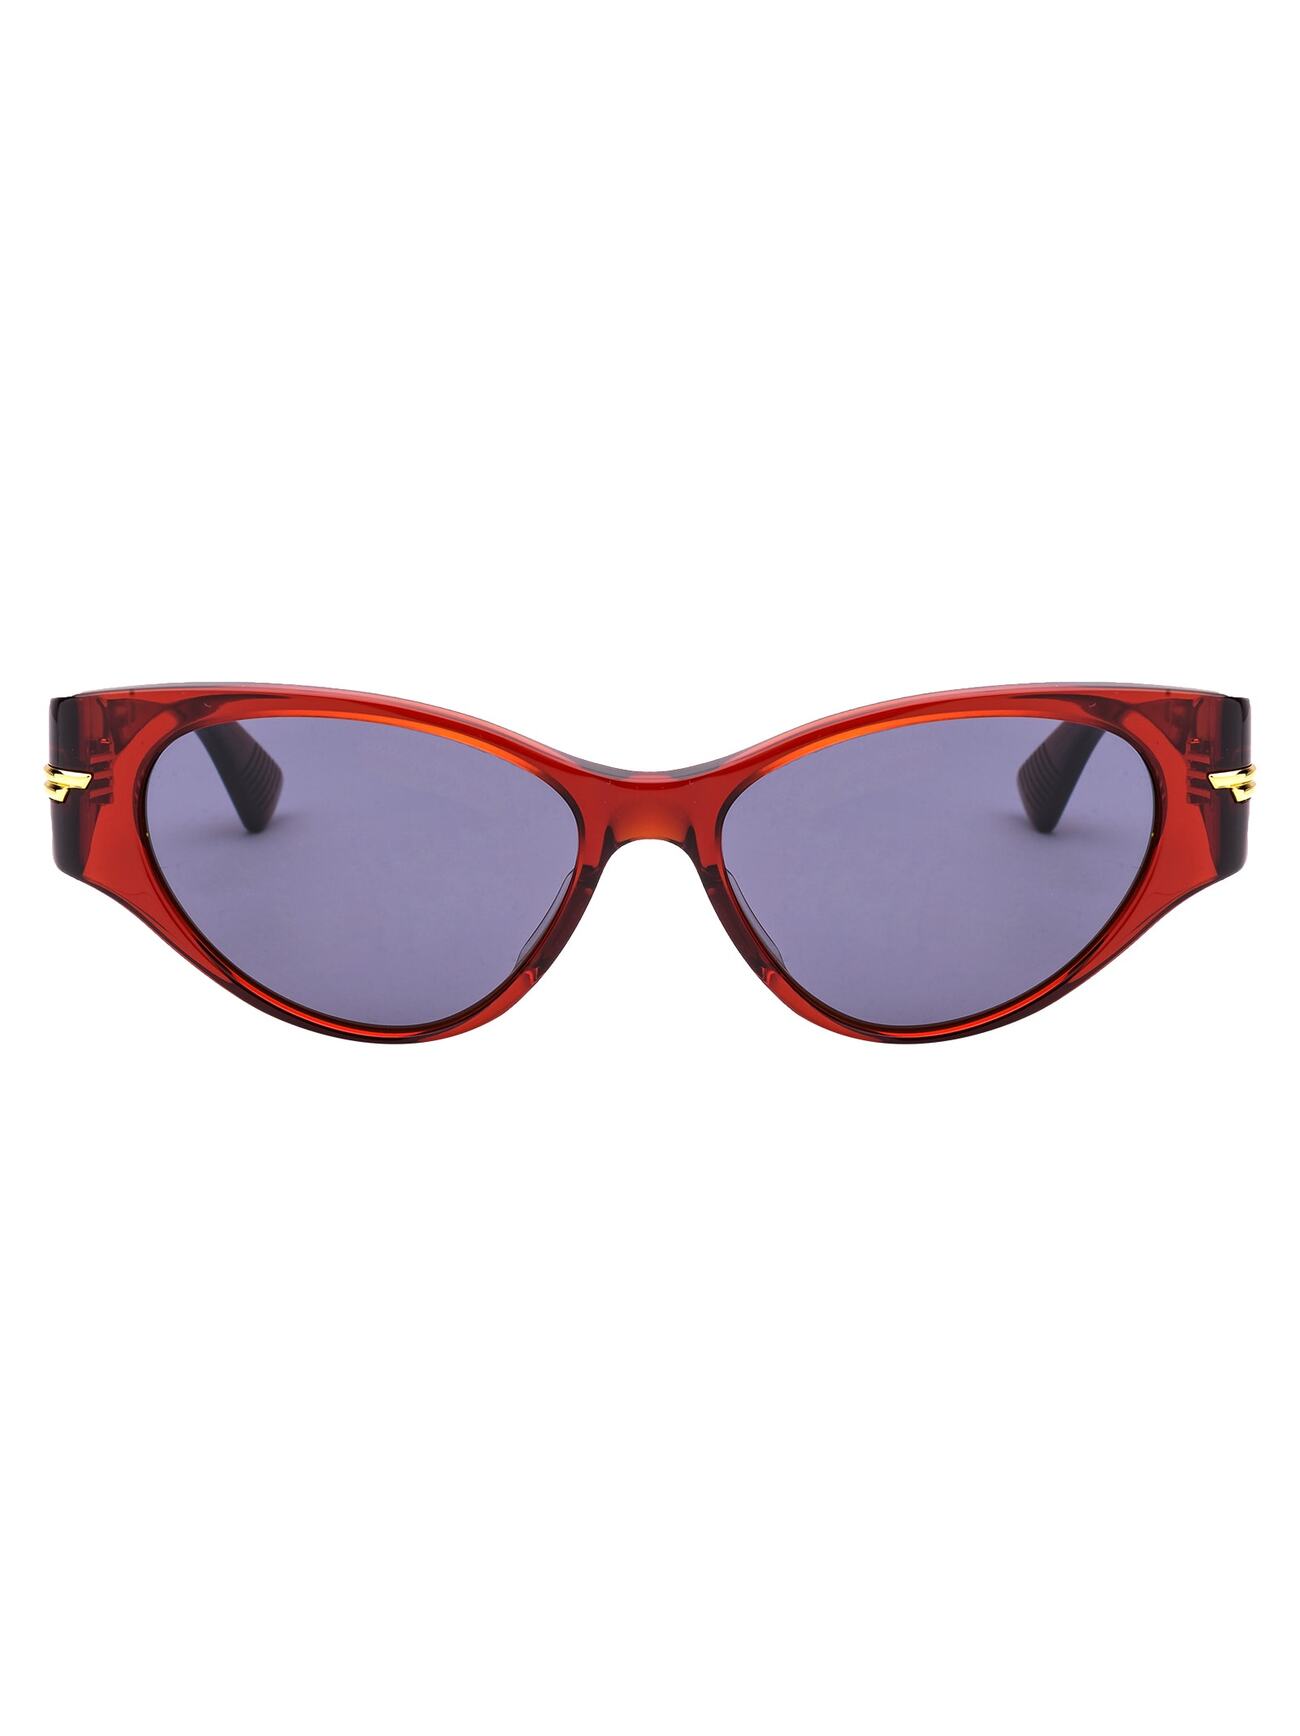 Bottega Veneta Eyewear Bv1002s Sunglasses in grey / burgundy